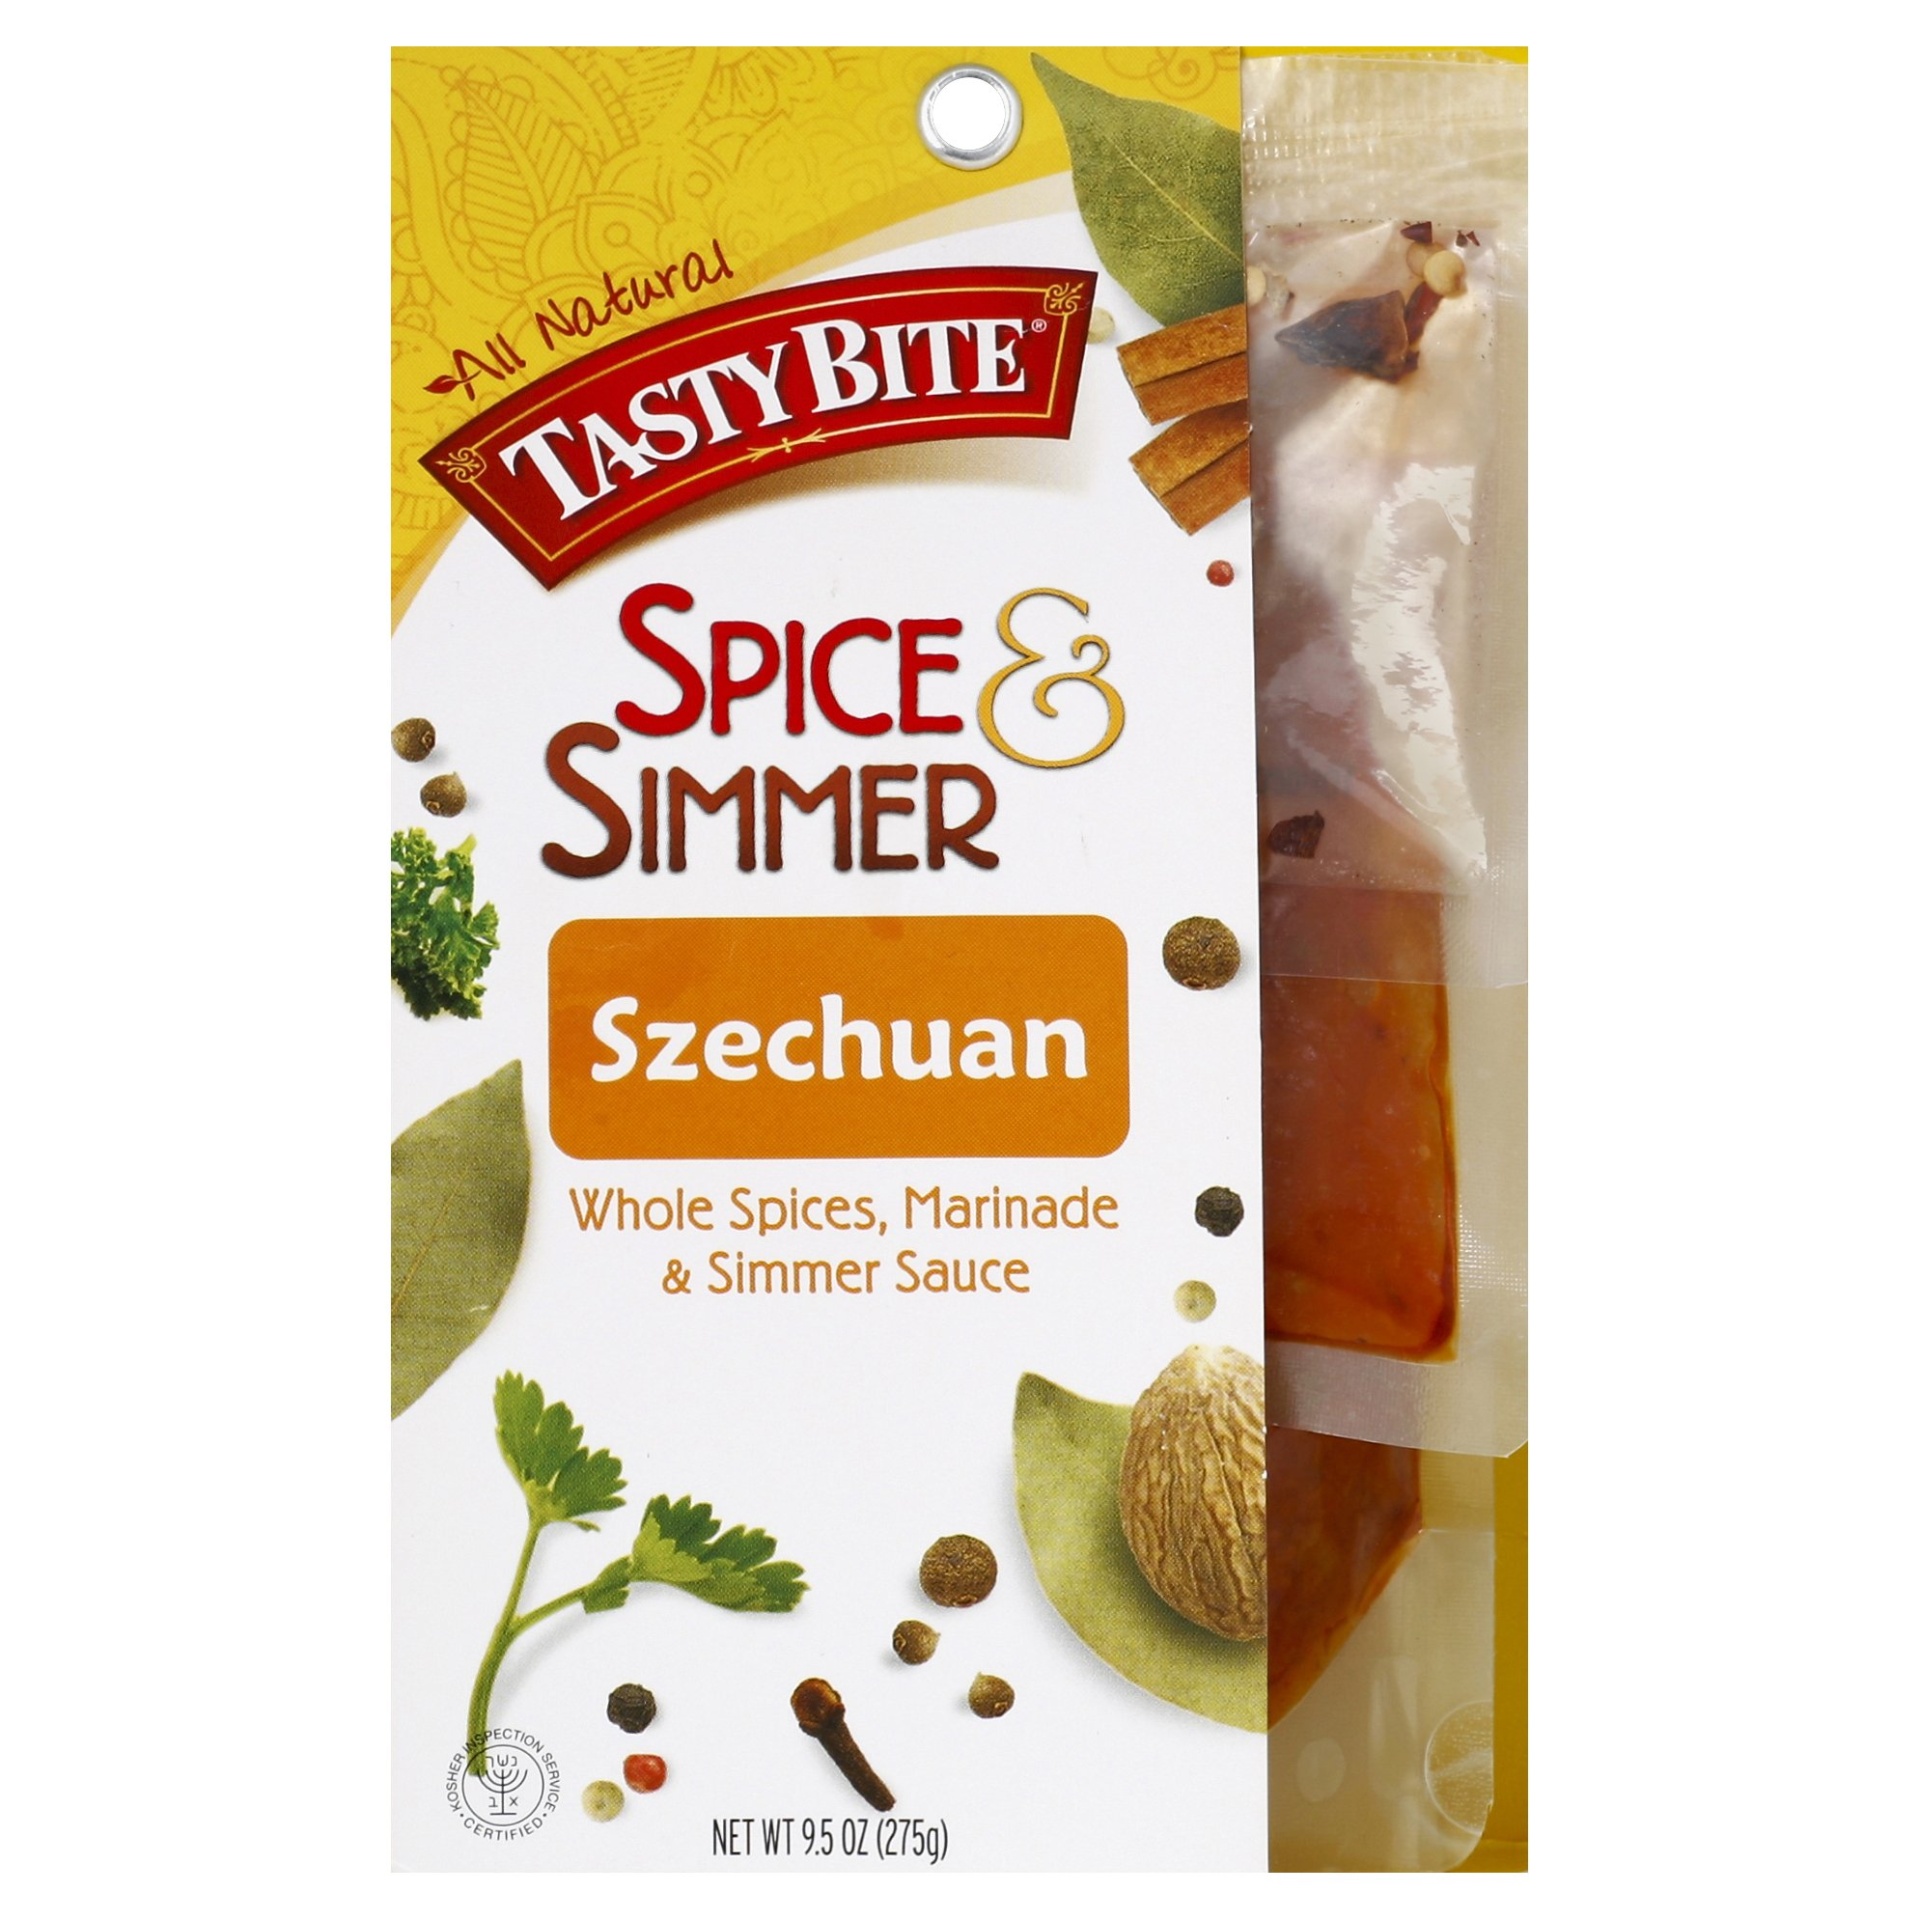 slide 1 of 2, Tasty Bite Spice & Simmer Szechuan Whole Spices, Marinade & Simmer Sauce, 9.5 oz